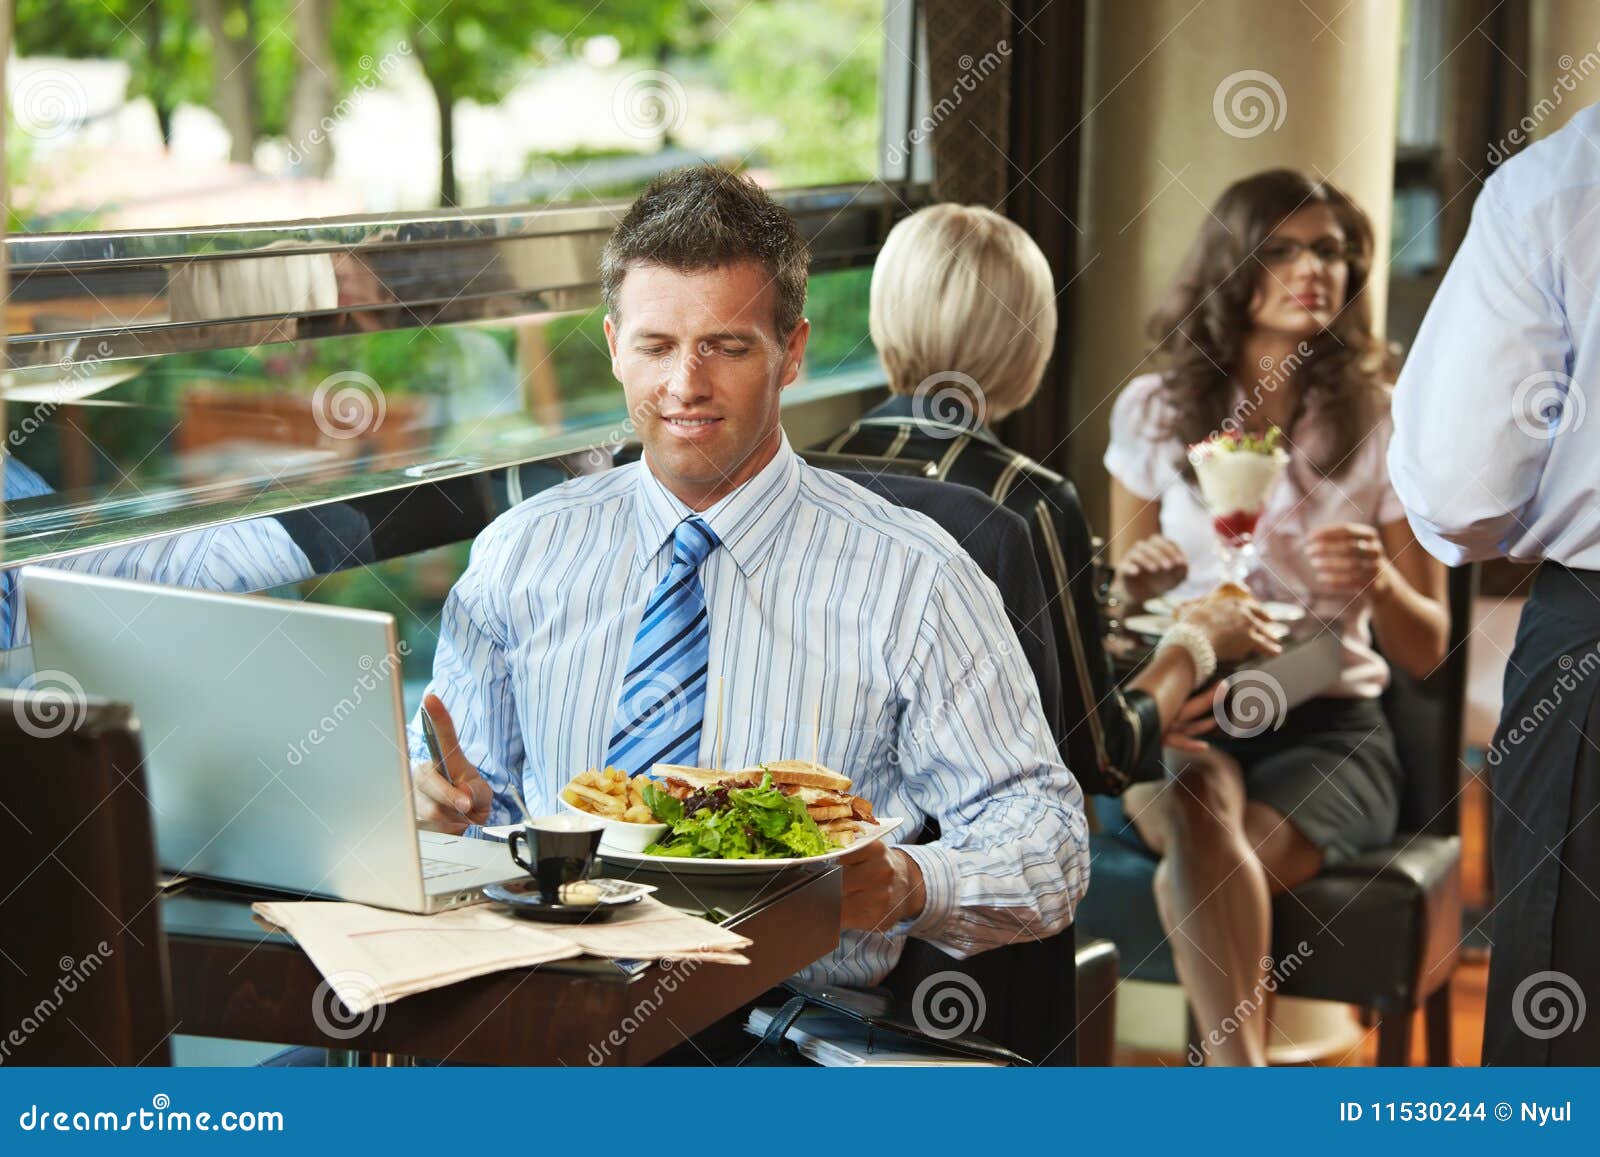 С мужем в гостях рассказ. Бизнесмен в кафе. Люди за столом в ресторане. Мужчина сидит за столом в ресторане. Человек сидит за столом в кафе.